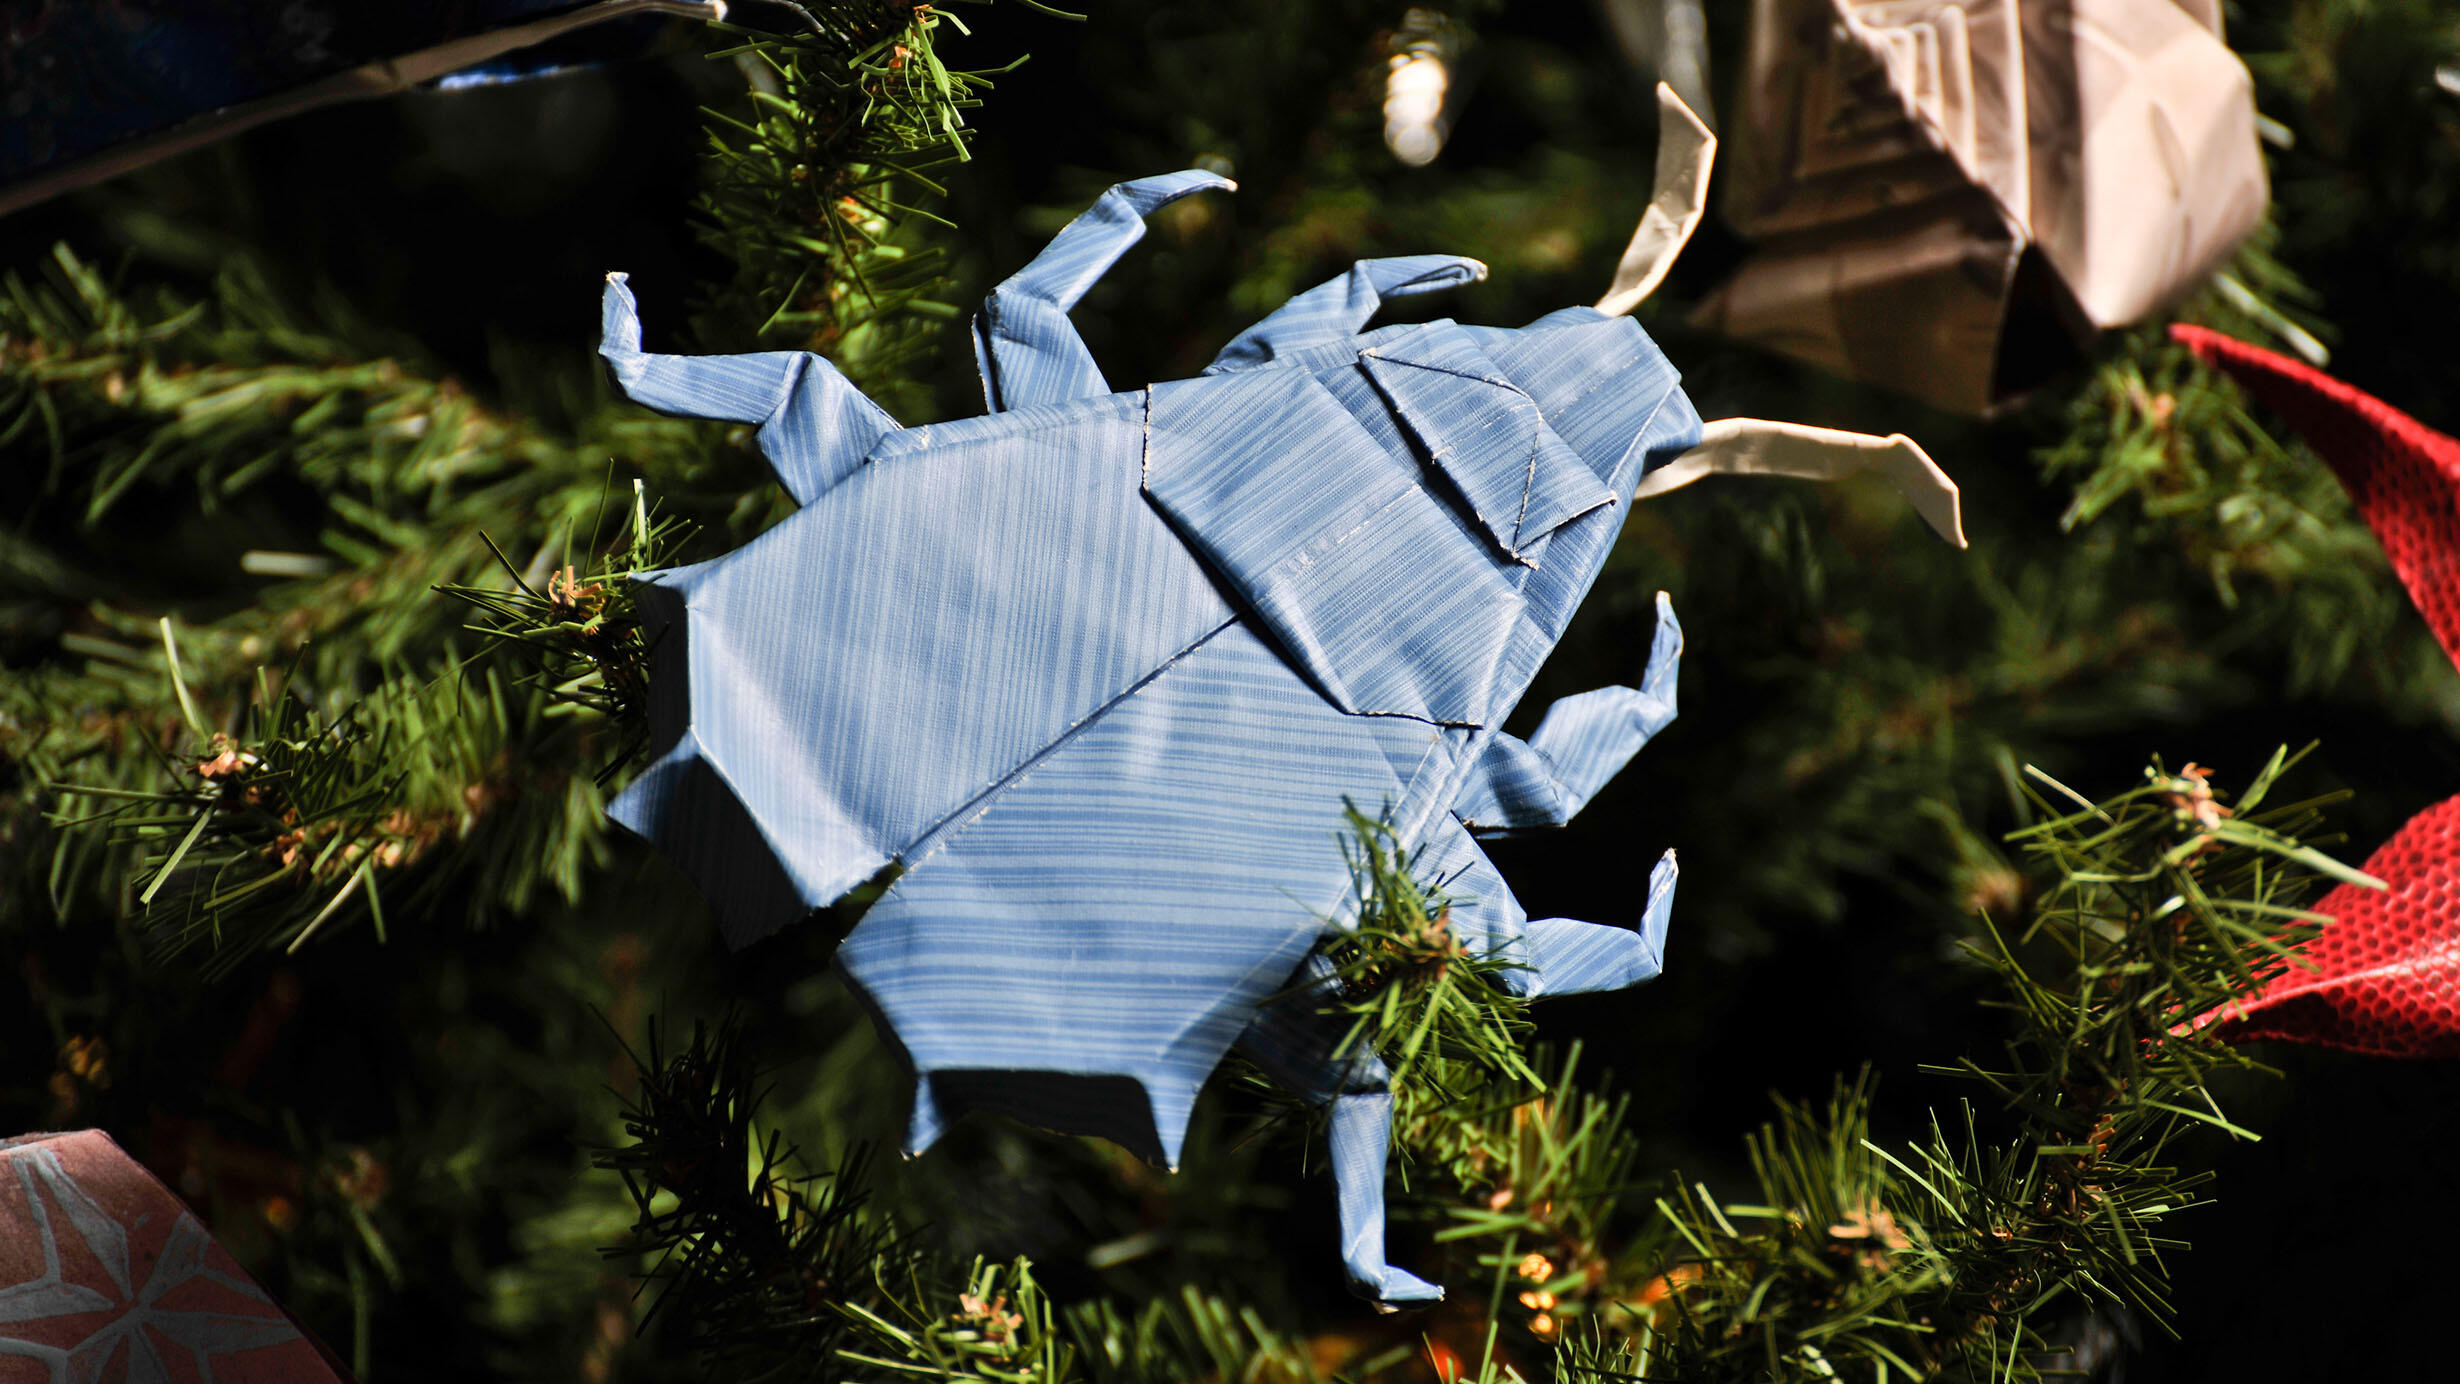 Origami (folder paper) model of a beetle.